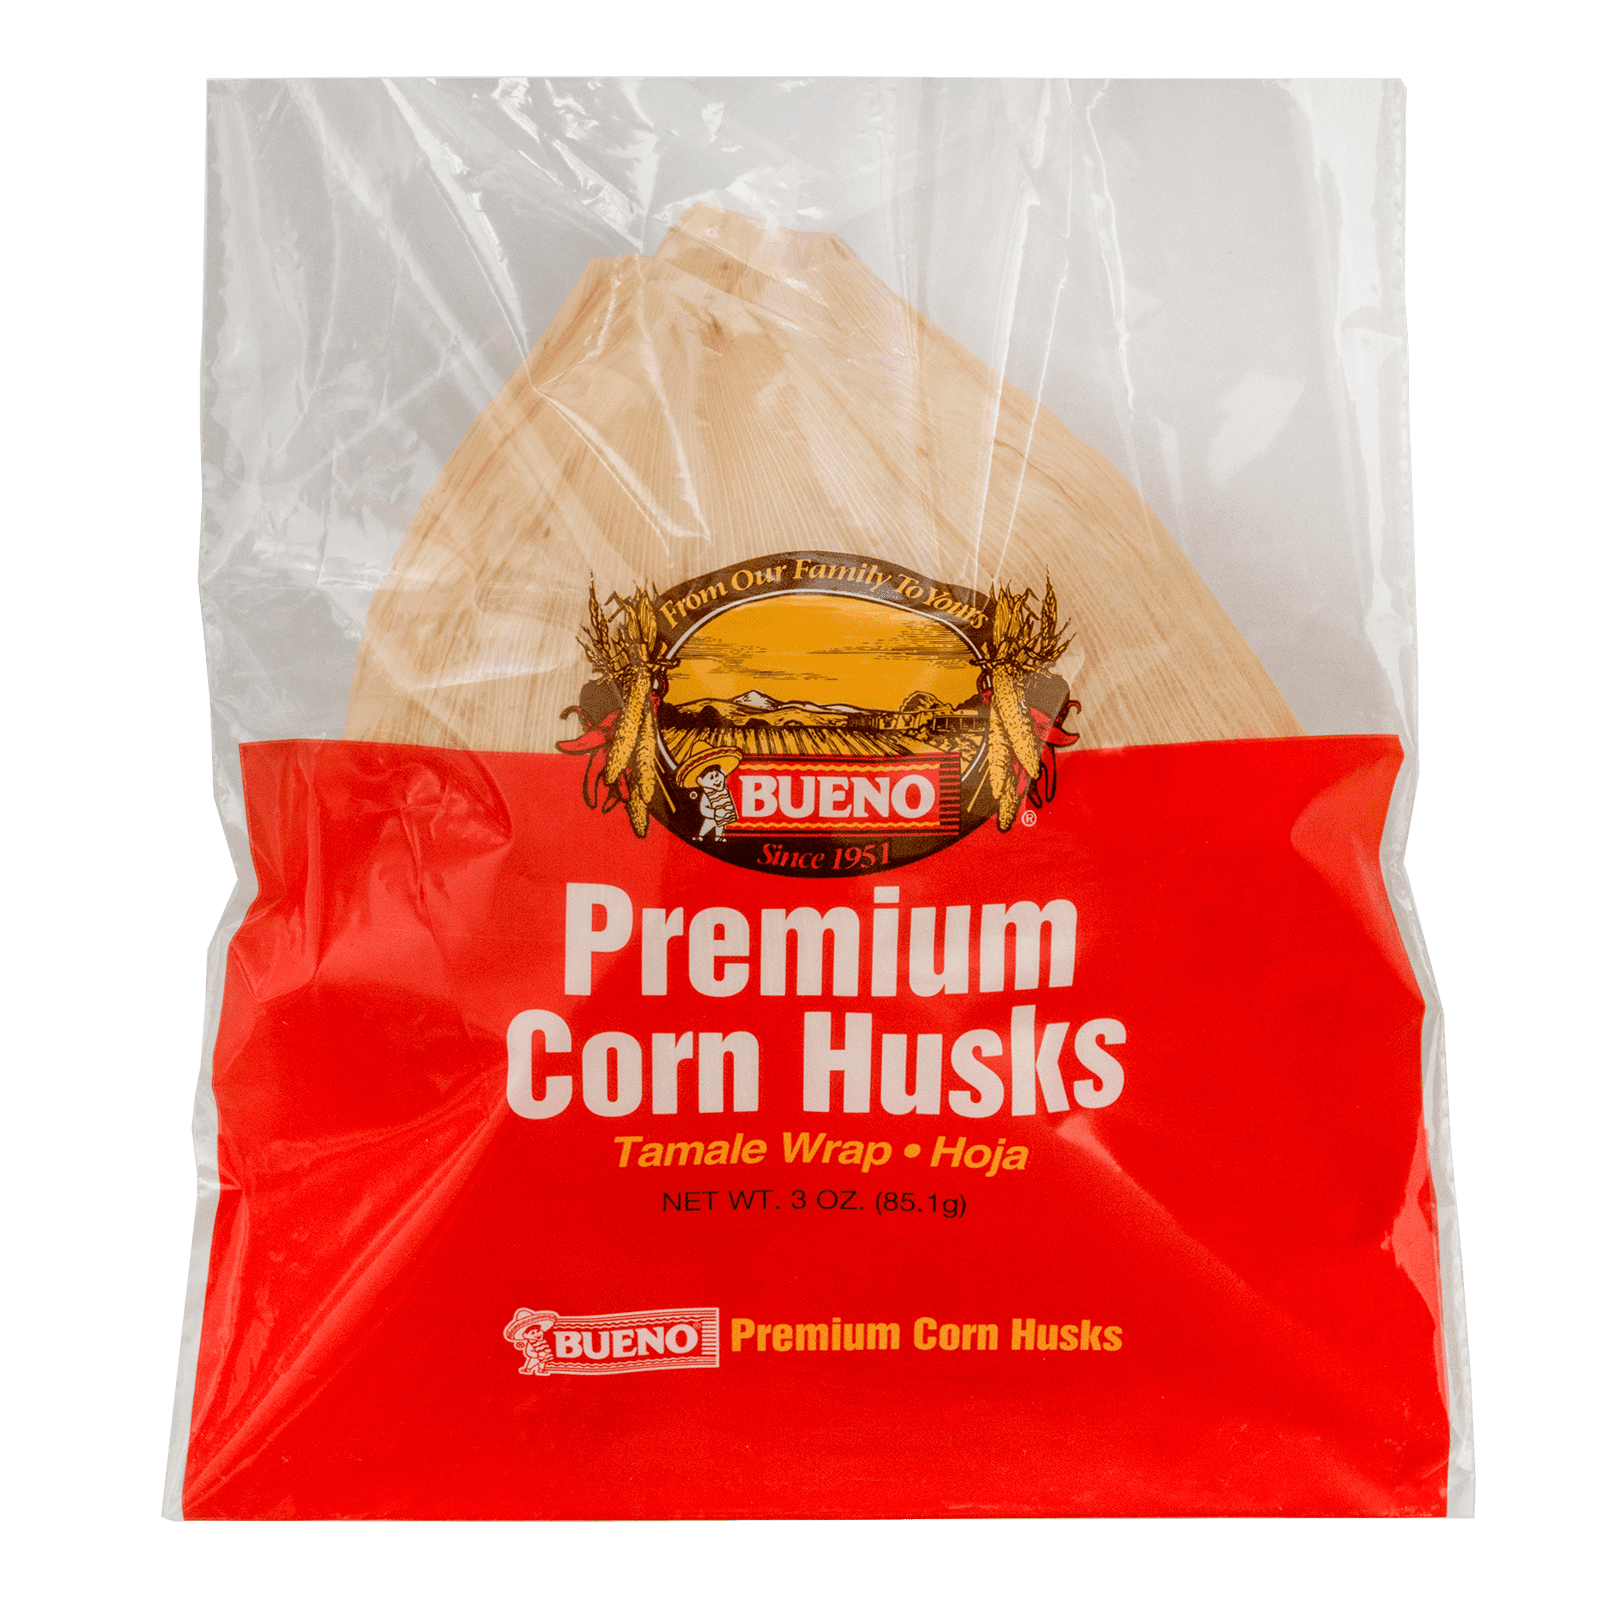 El Guapo Whole Corn Husks (Hoja Enconchada Para Tamales), 8 oz 